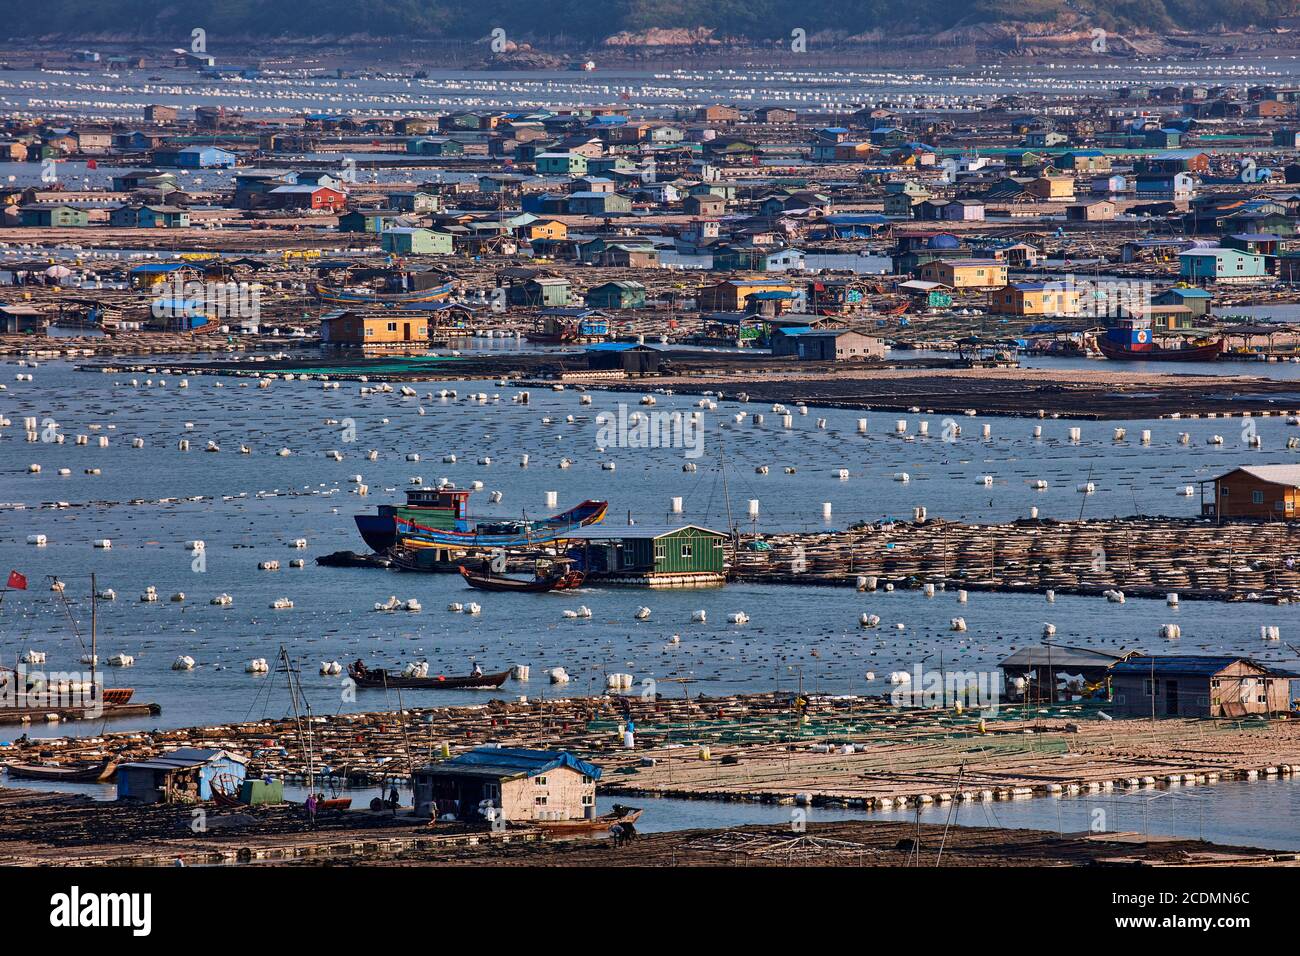 Città galleggiante in baia, case su costruzioni di bambù con acquaculture, Xiapu, Cina Foto Stock